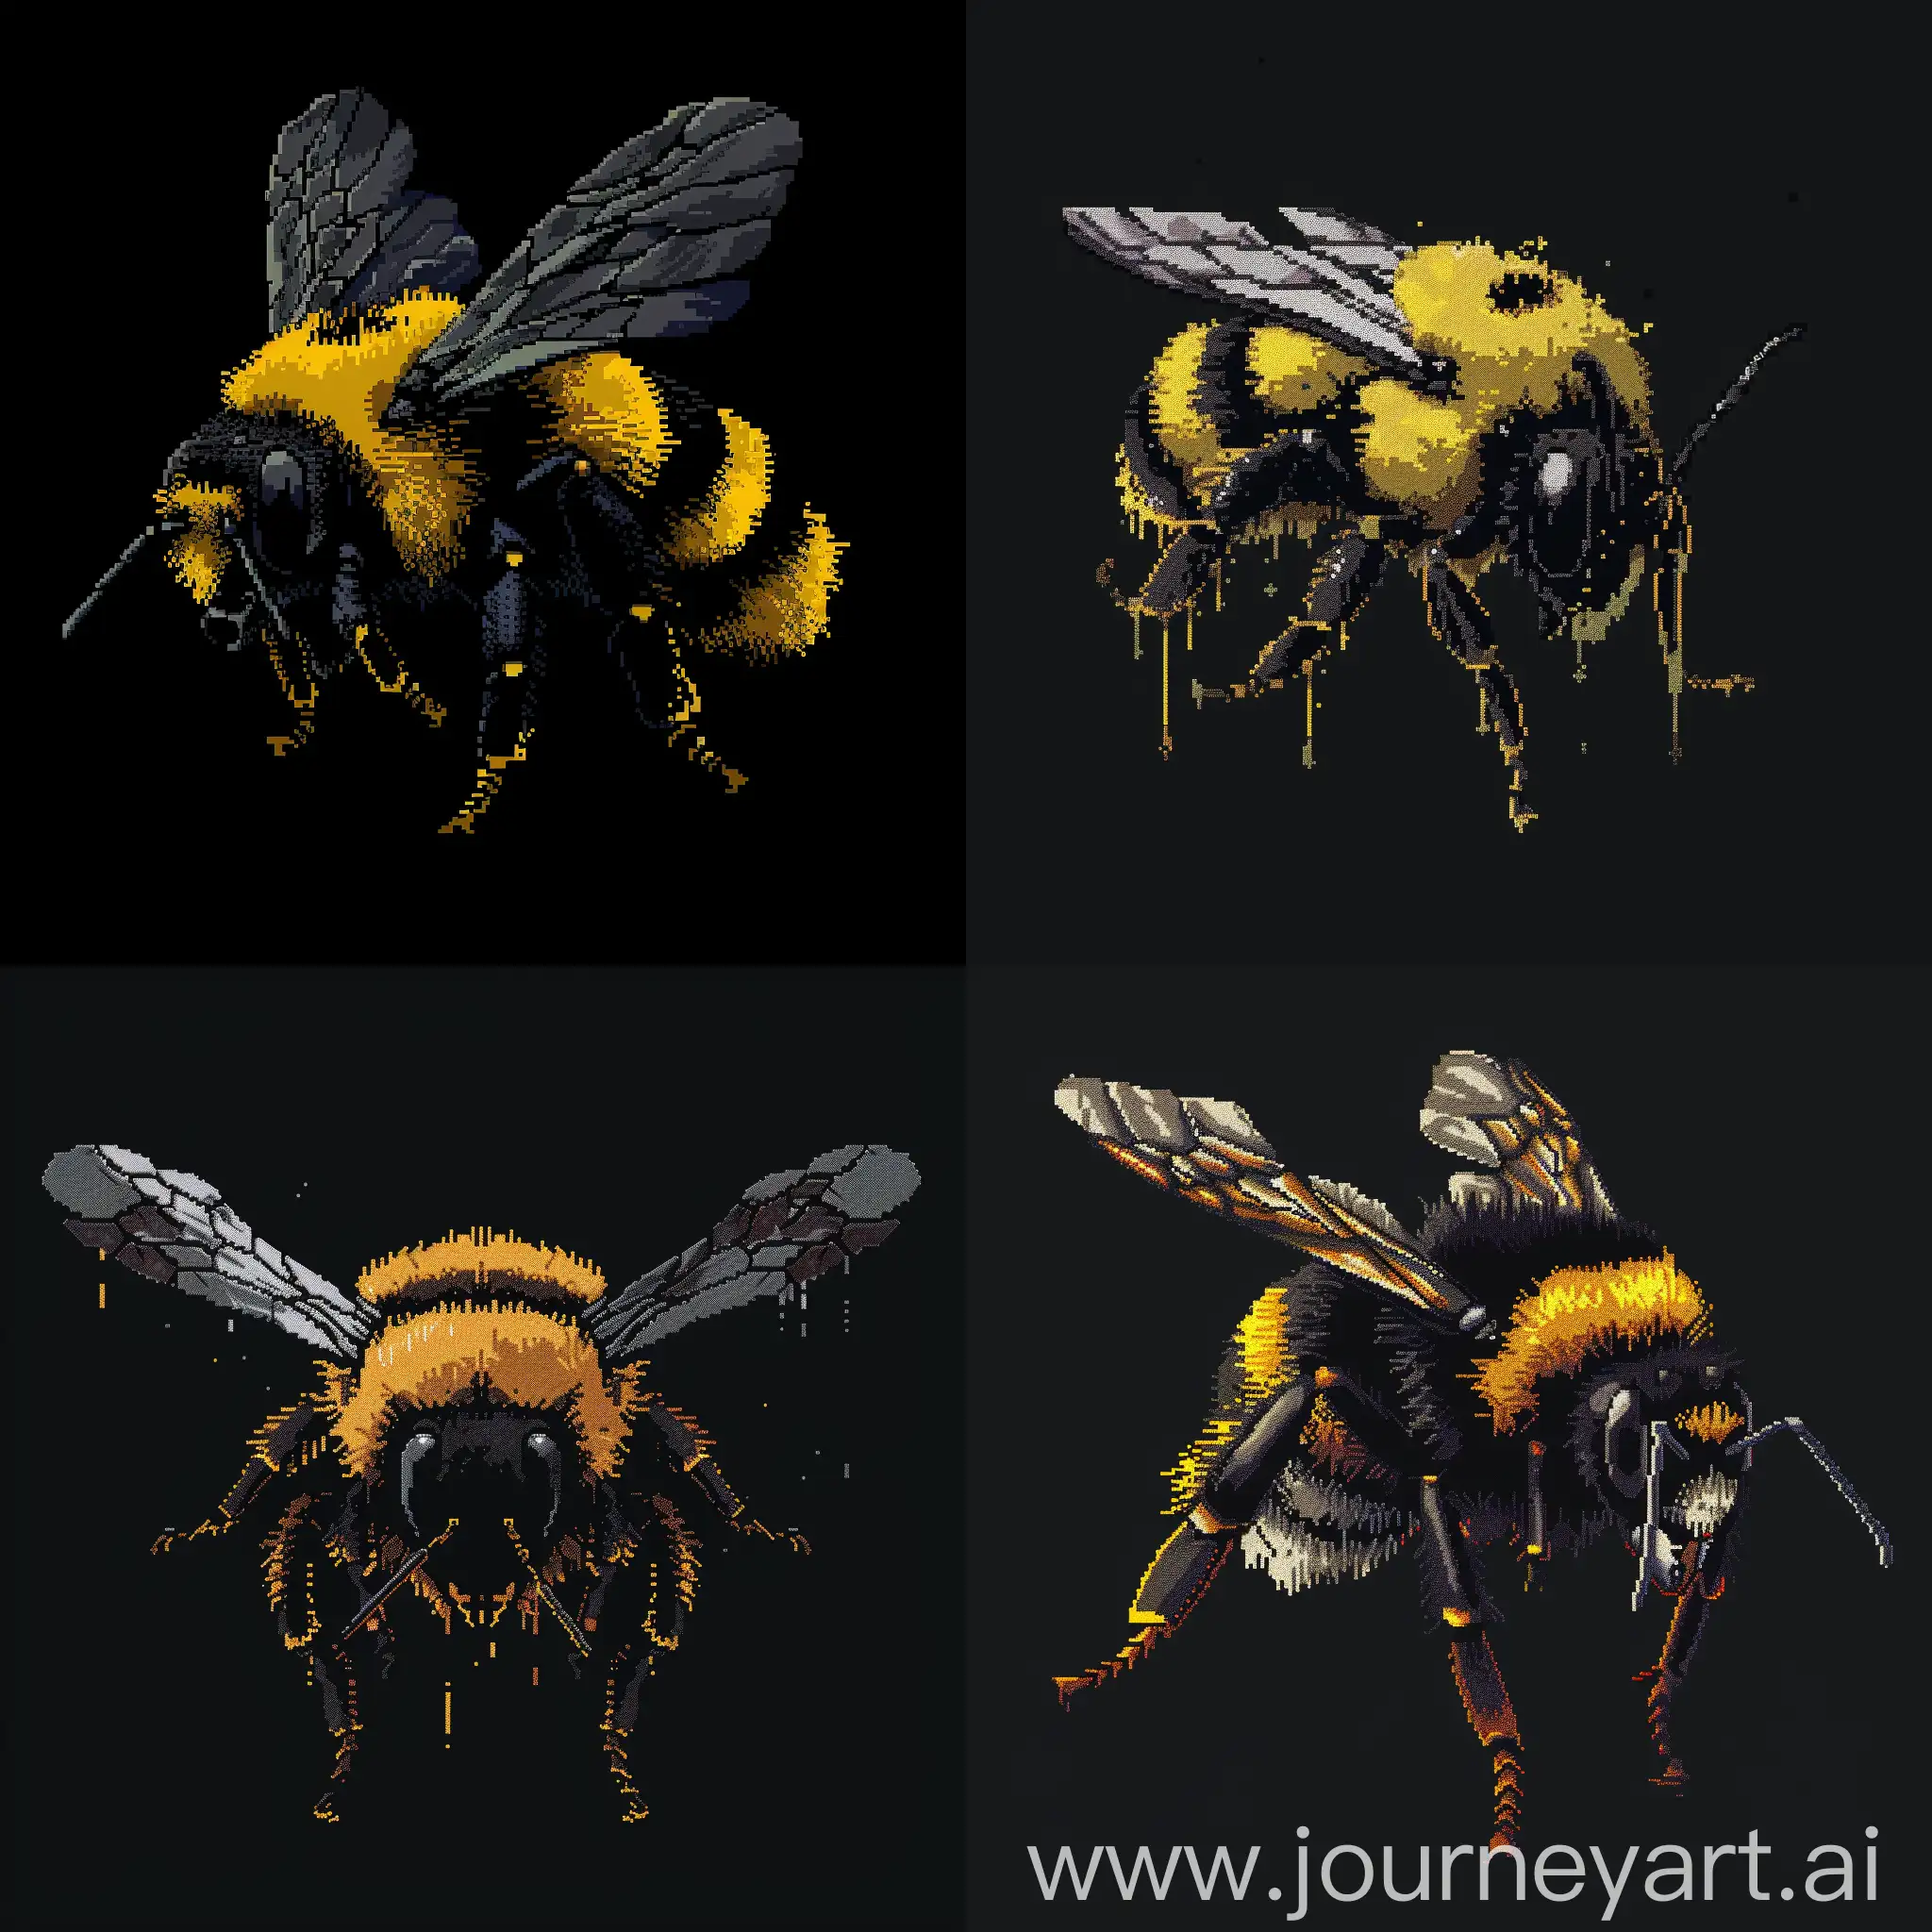 Bumblebee-Pixel-Art-in-Horror-Style-on-Black-Background